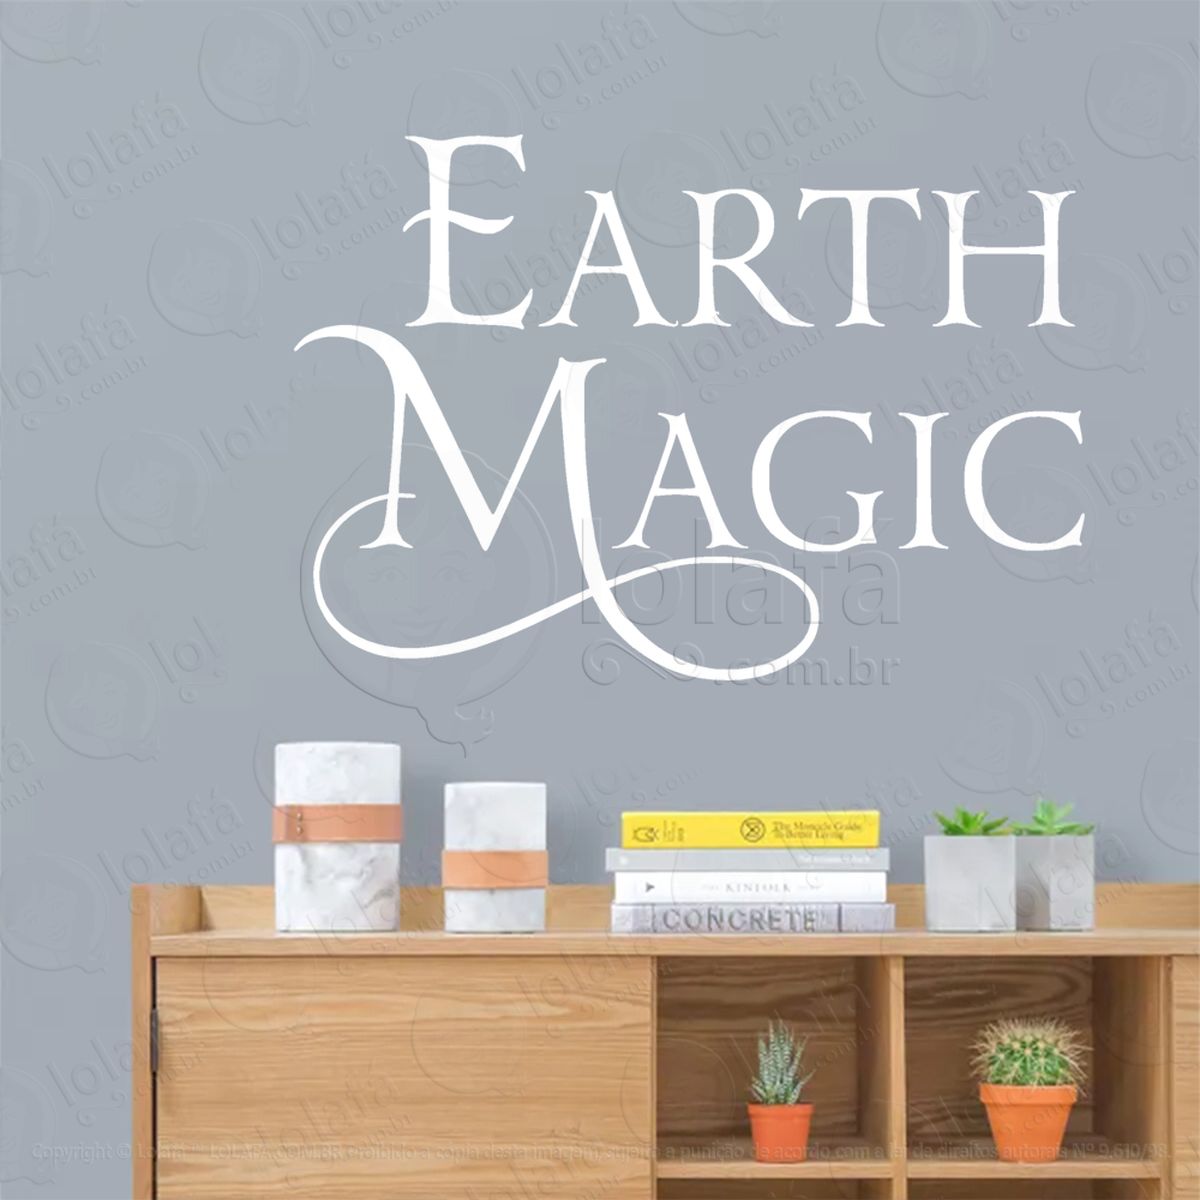 magia da terra earth magic adesivo de parede decorativo para casa, sala, quarto, vidro e altar ocultista - mod:249